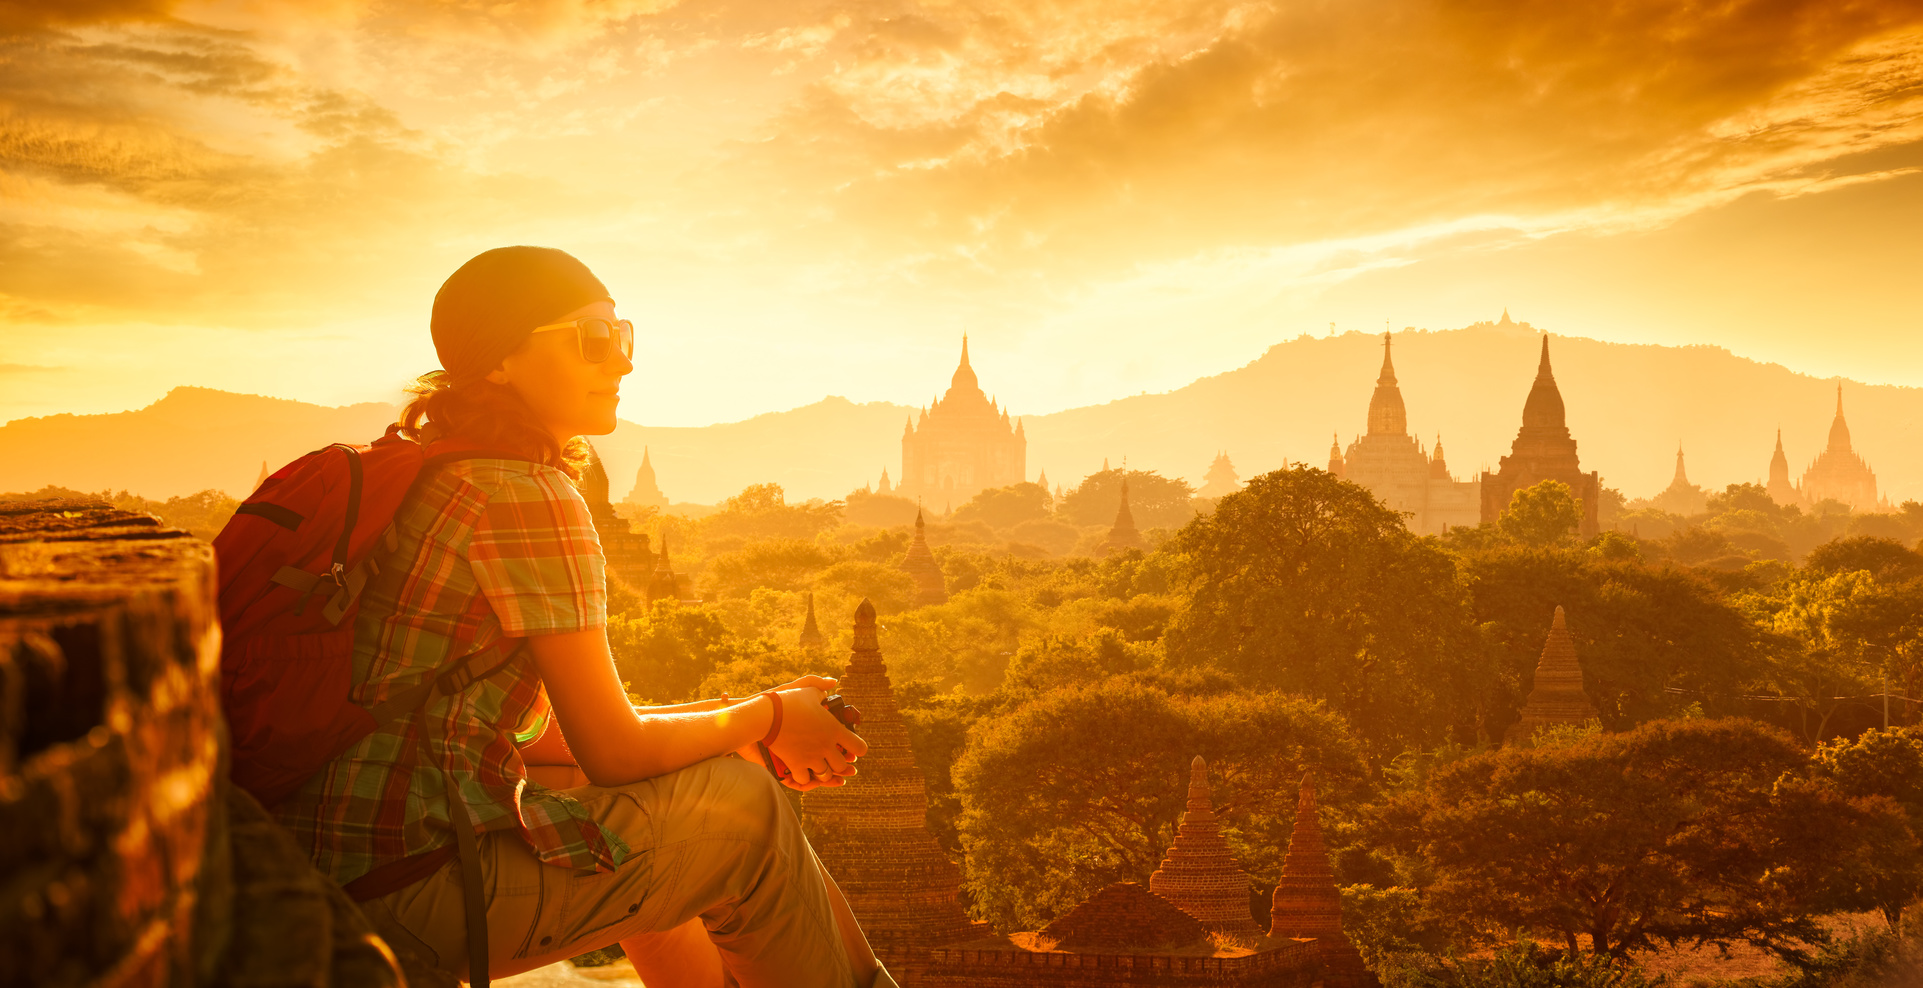 Youth, Academic, Student / Educational Travel & Volunteer Experiences in Myanmar